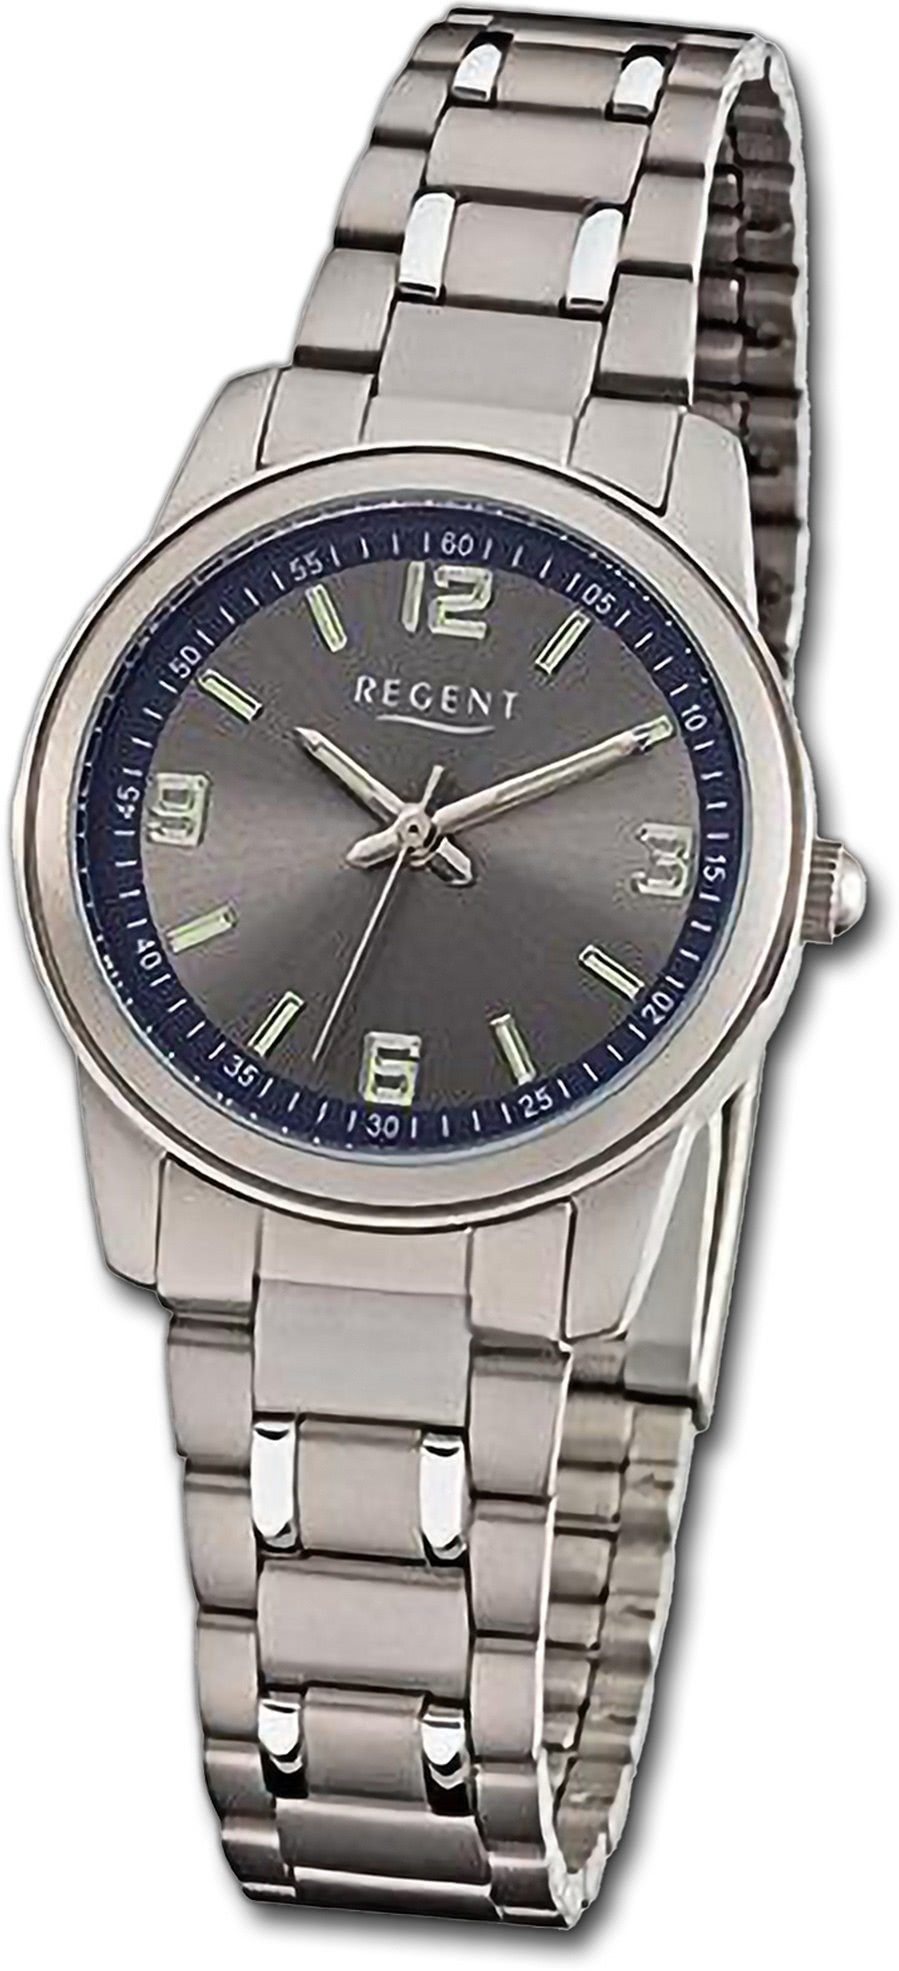 Armbanduhr Regent grau, Quarzuhr Damen groß Regent Gehäuse, rundes Metallarmband silber, 27mm) Analog, (ca. Damenuhr